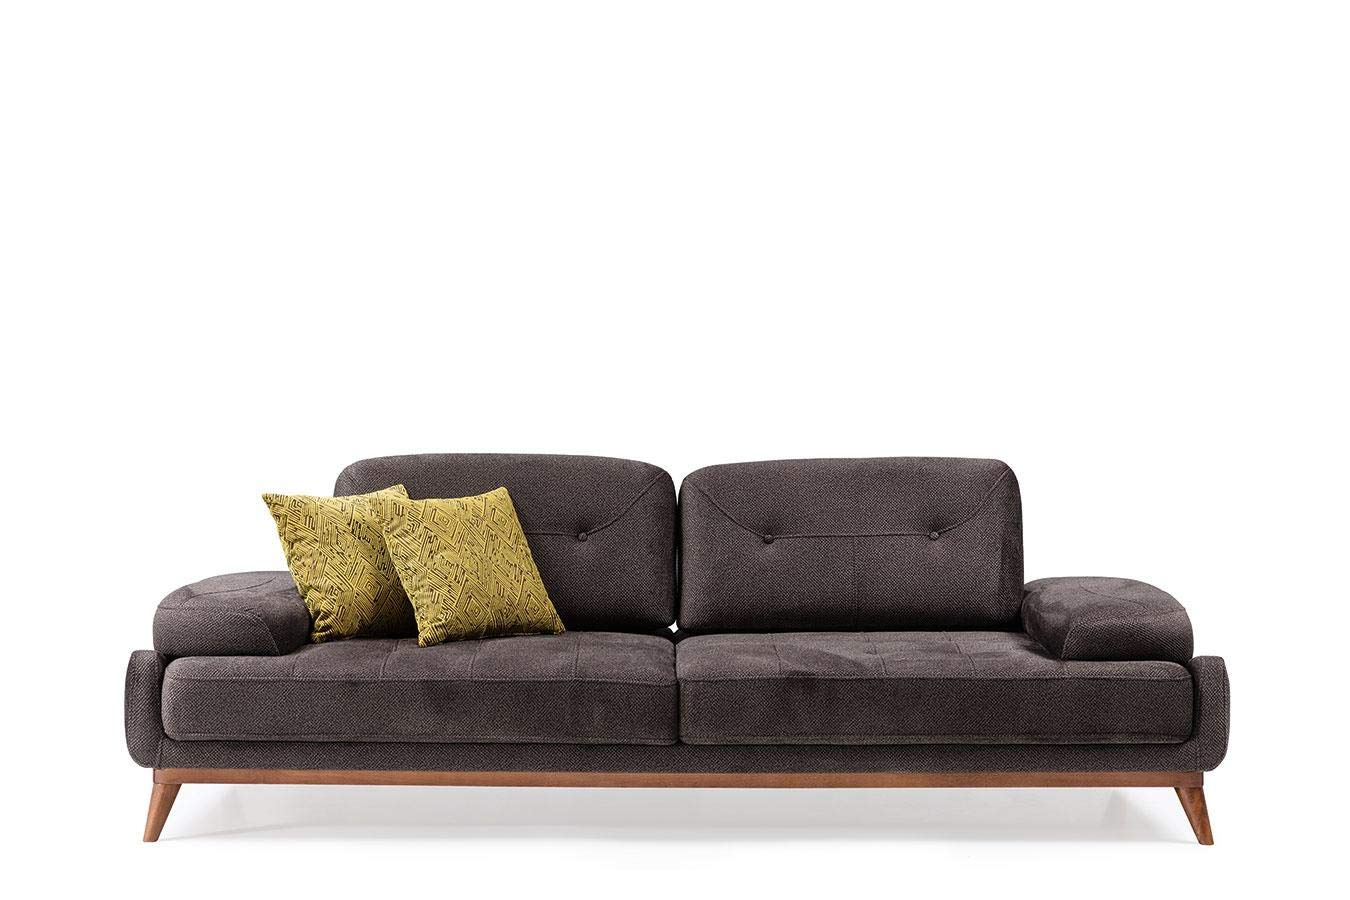 Designer Sofa Set:- 2+2+1 Fabric 6 Seater Luxury Furniture Sofa Set with Arms Chair (Yellow Printed, Dark Grey)